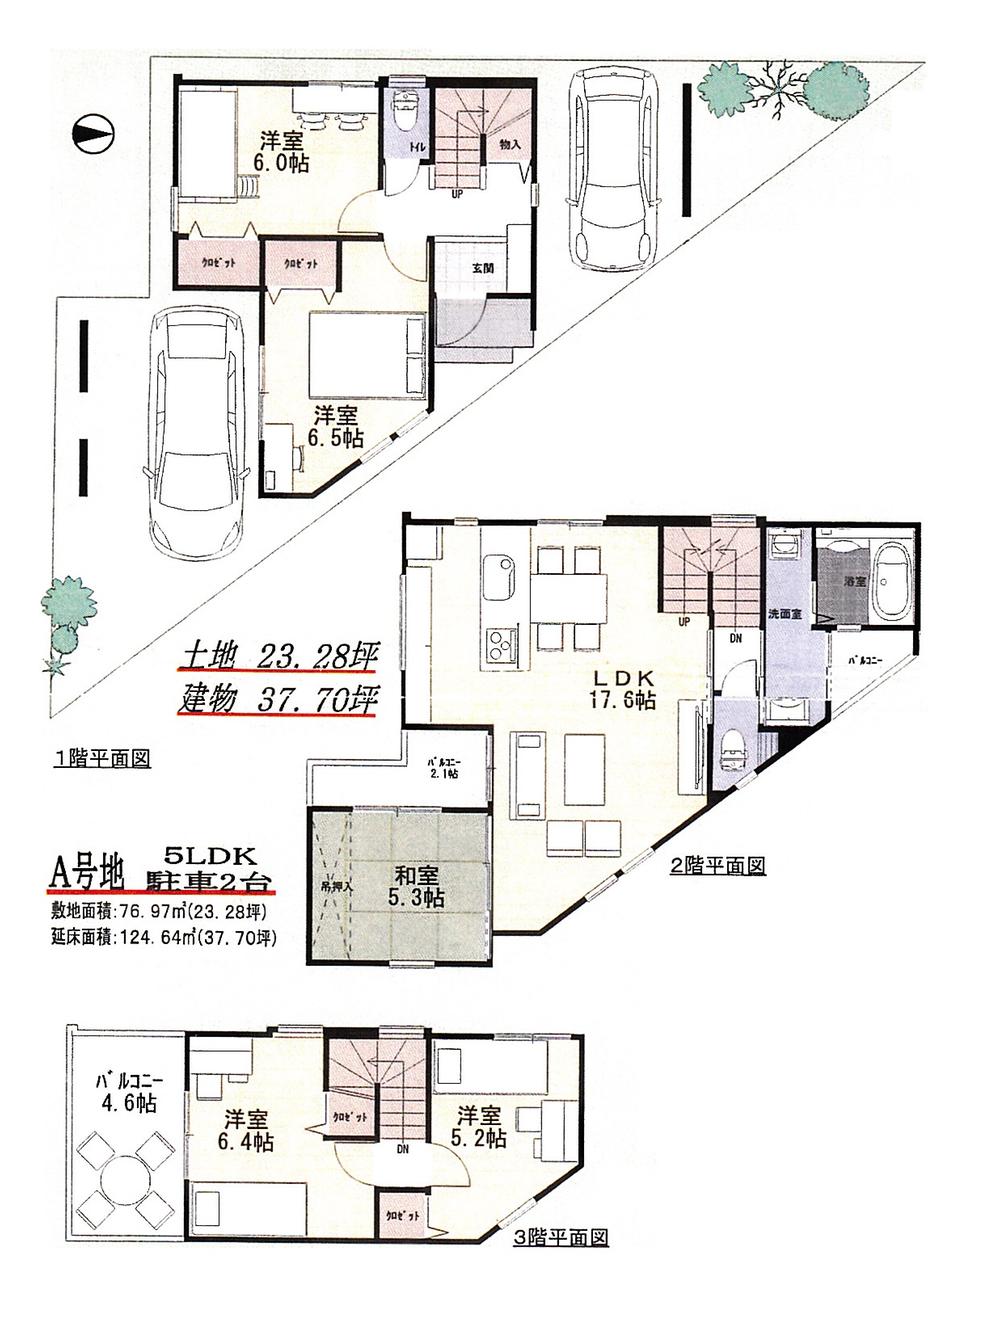 Floor plan. (Uchindai-cho 3-chome A No. land), Price 40,800,000 yen, 5LDK, Land area 76 sq m , Building area 124.97 sq m